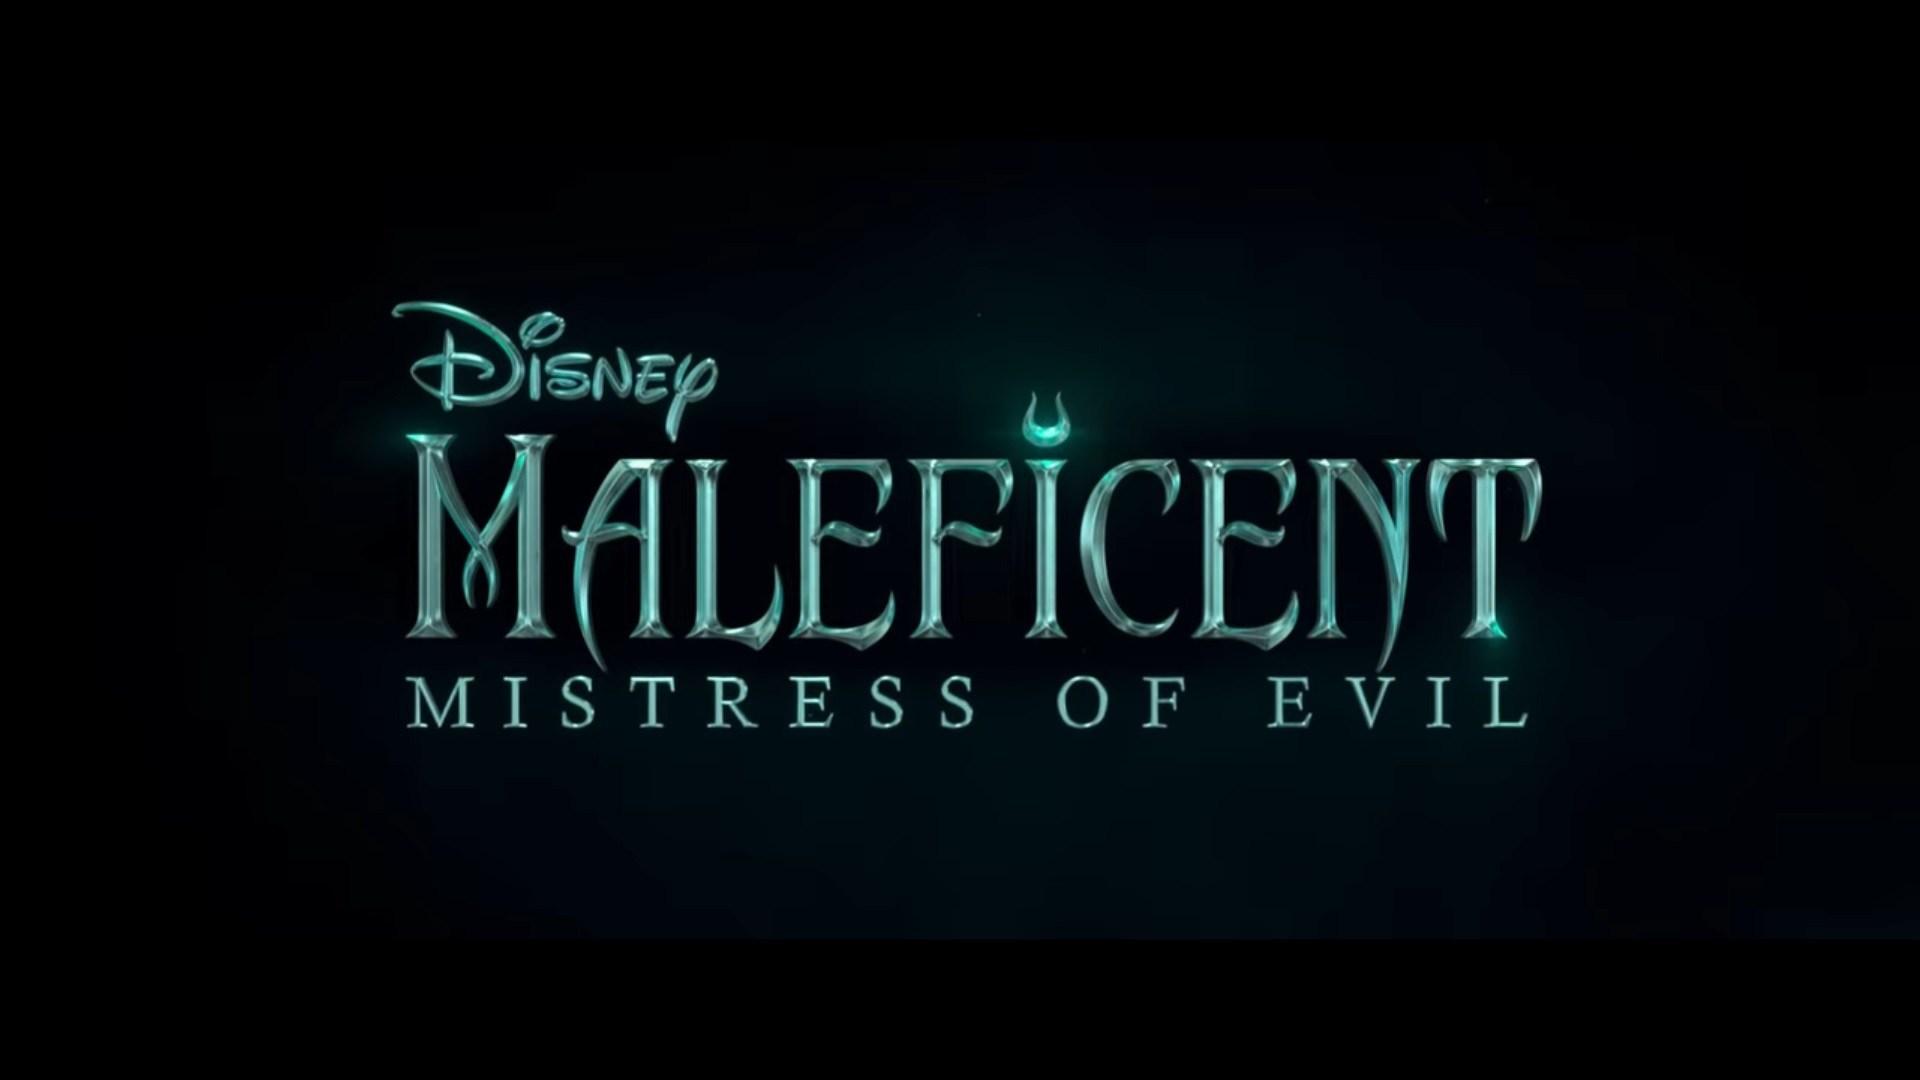 Disney's Maleficent: Mistress of Evil Streamed